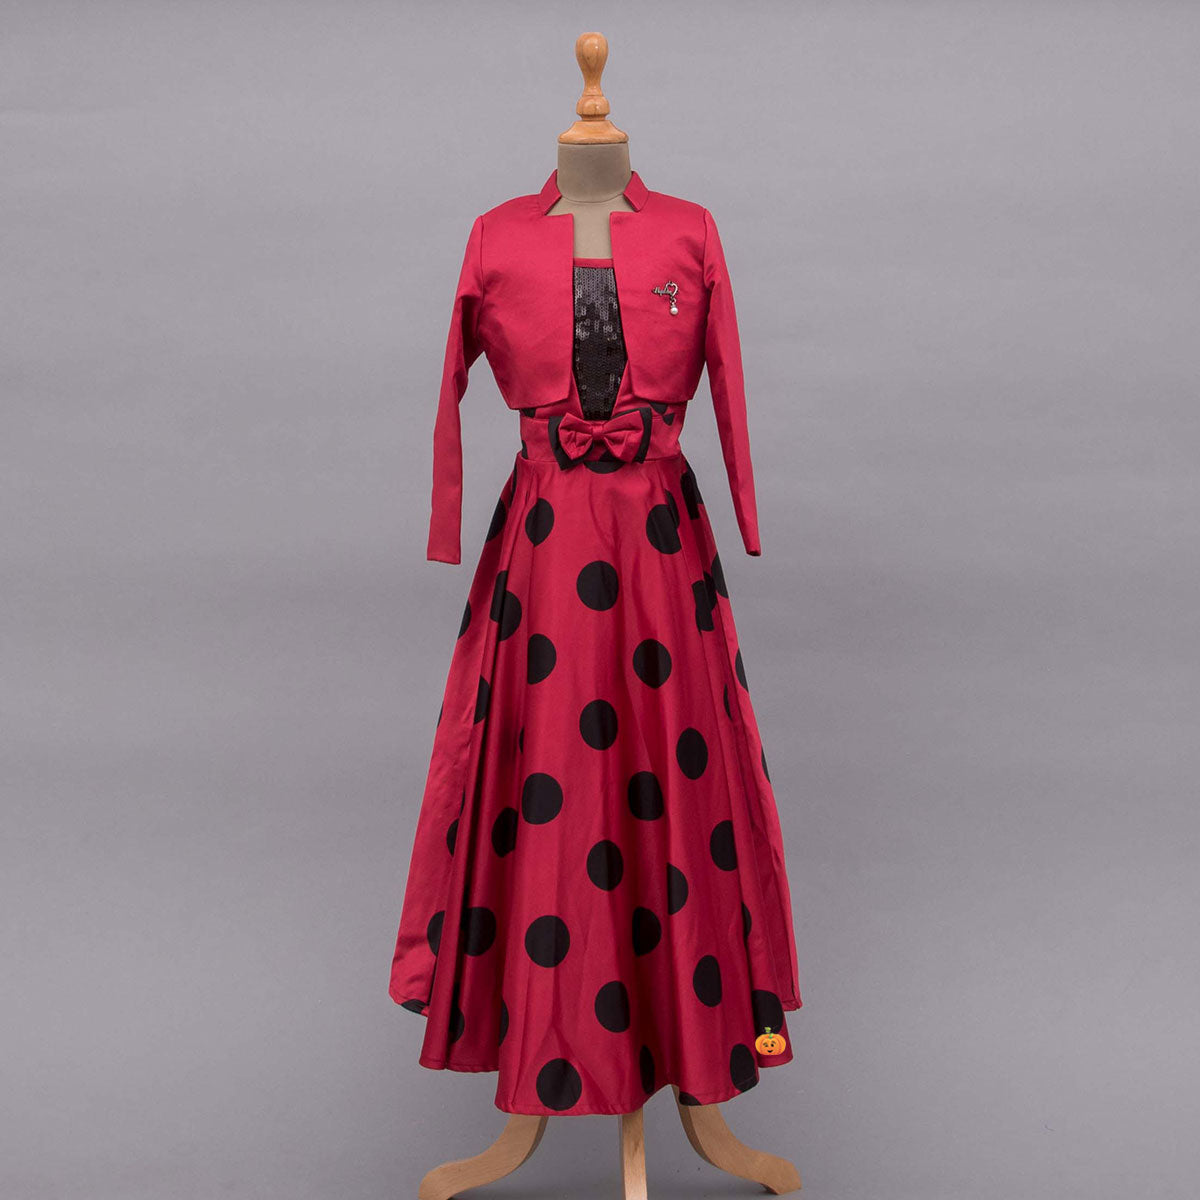 Buy Shahina Fashion Girls Polka Dot Frock Dress Casual Printed Sleeveless  Dress for Kids Black at Amazon.in